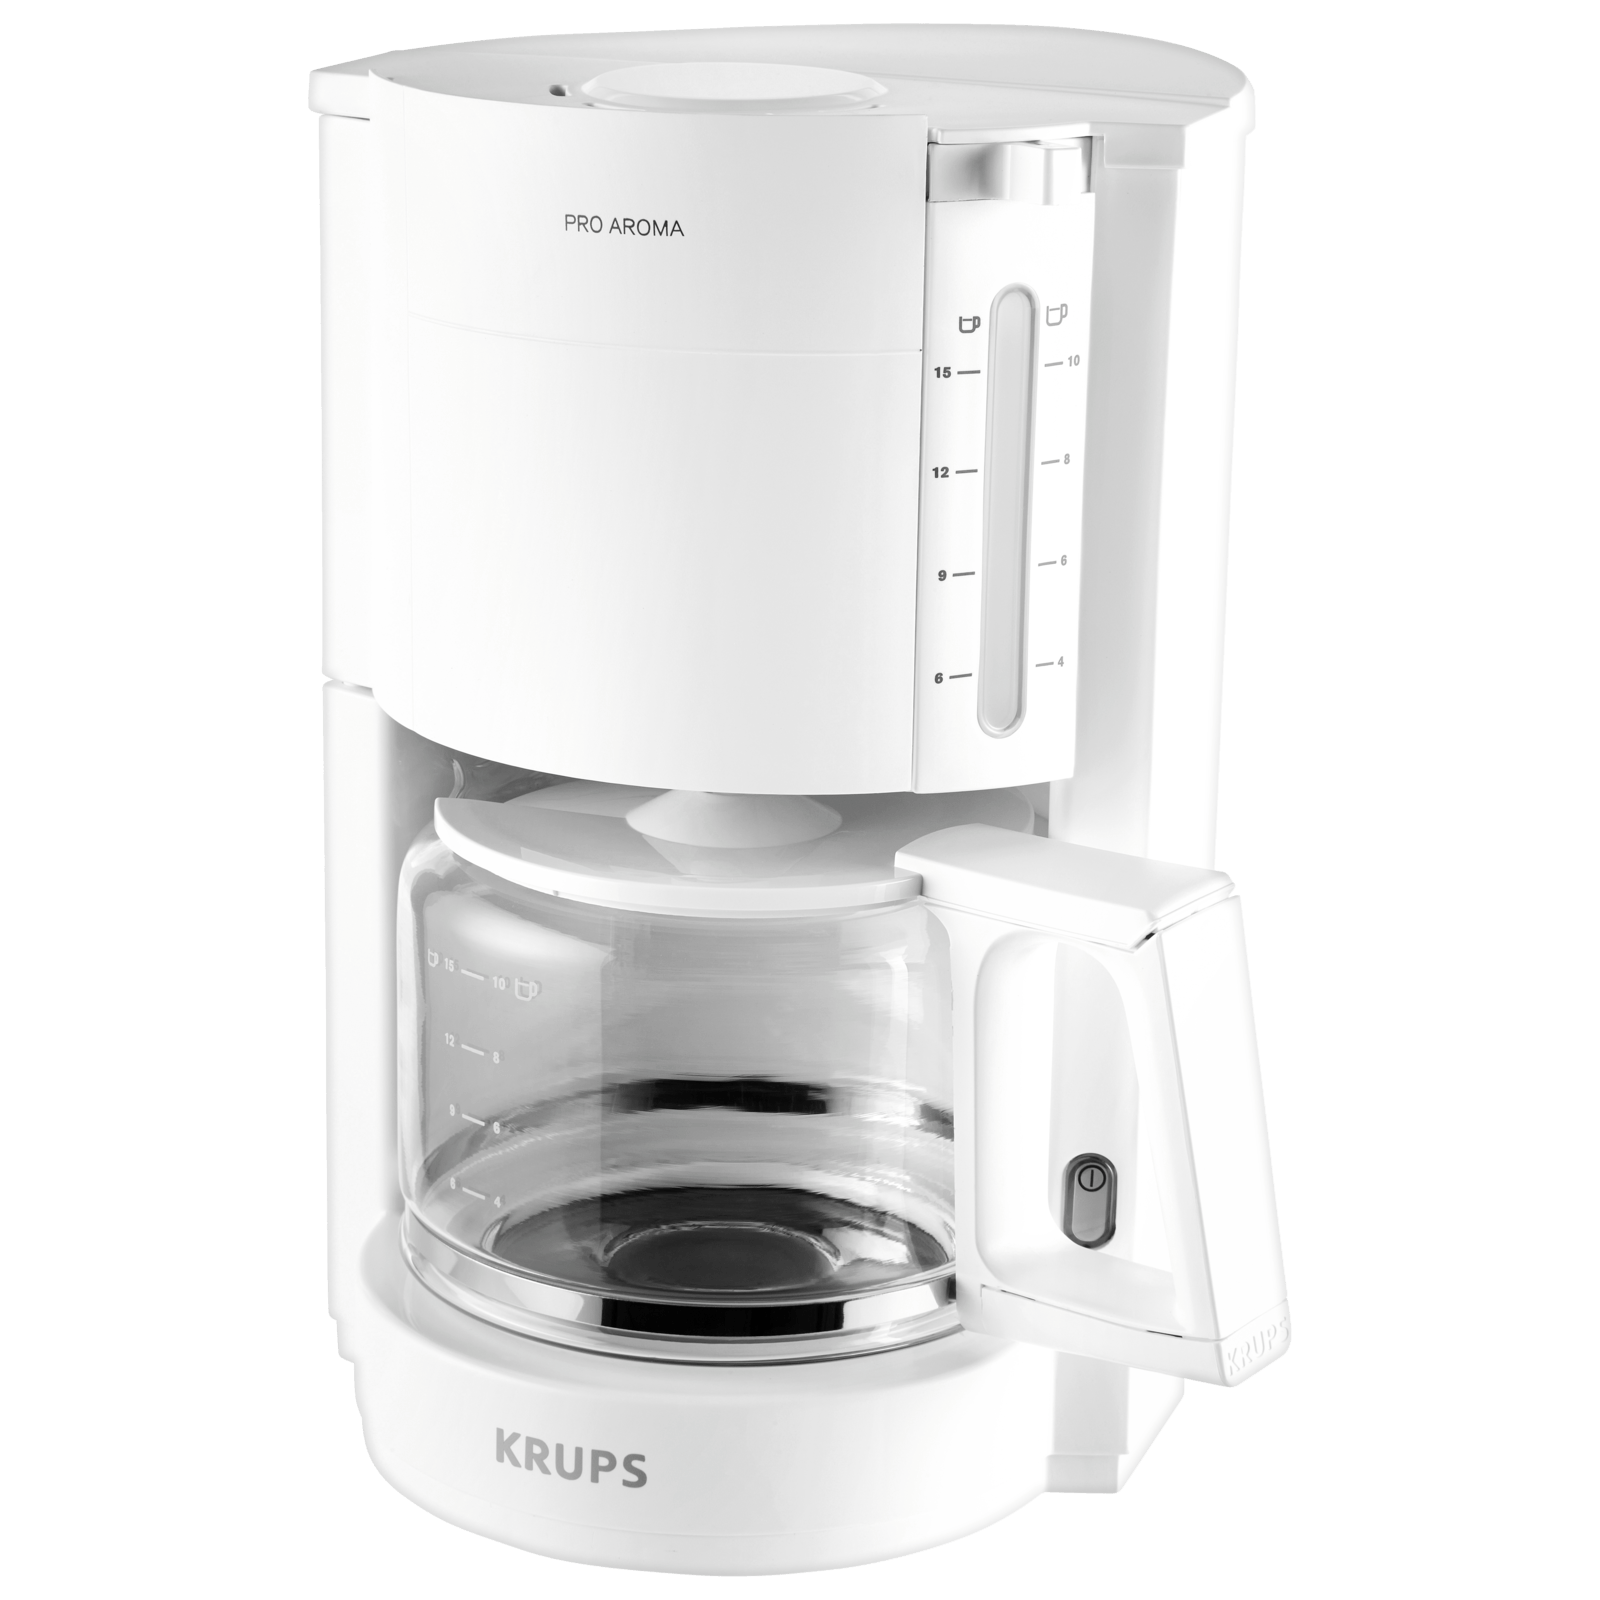 Krups F 309 01 ProAroma Drip Coffee Maker White